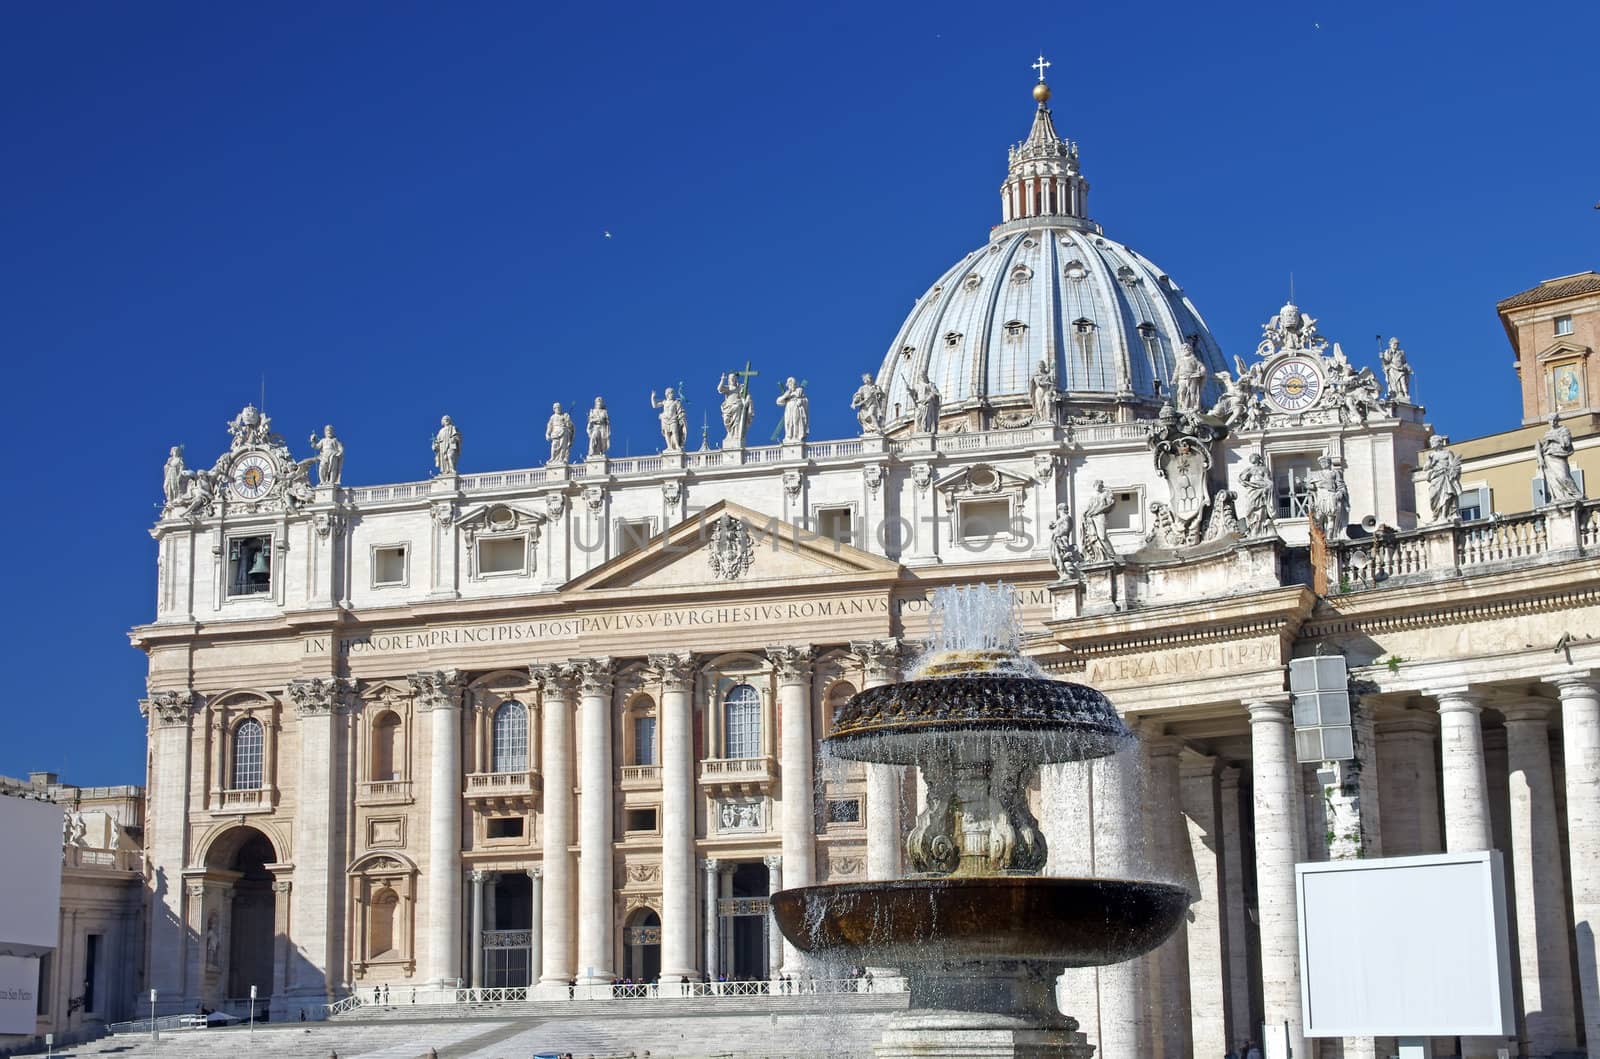 Saint Peter Basilica (square view) in Rome